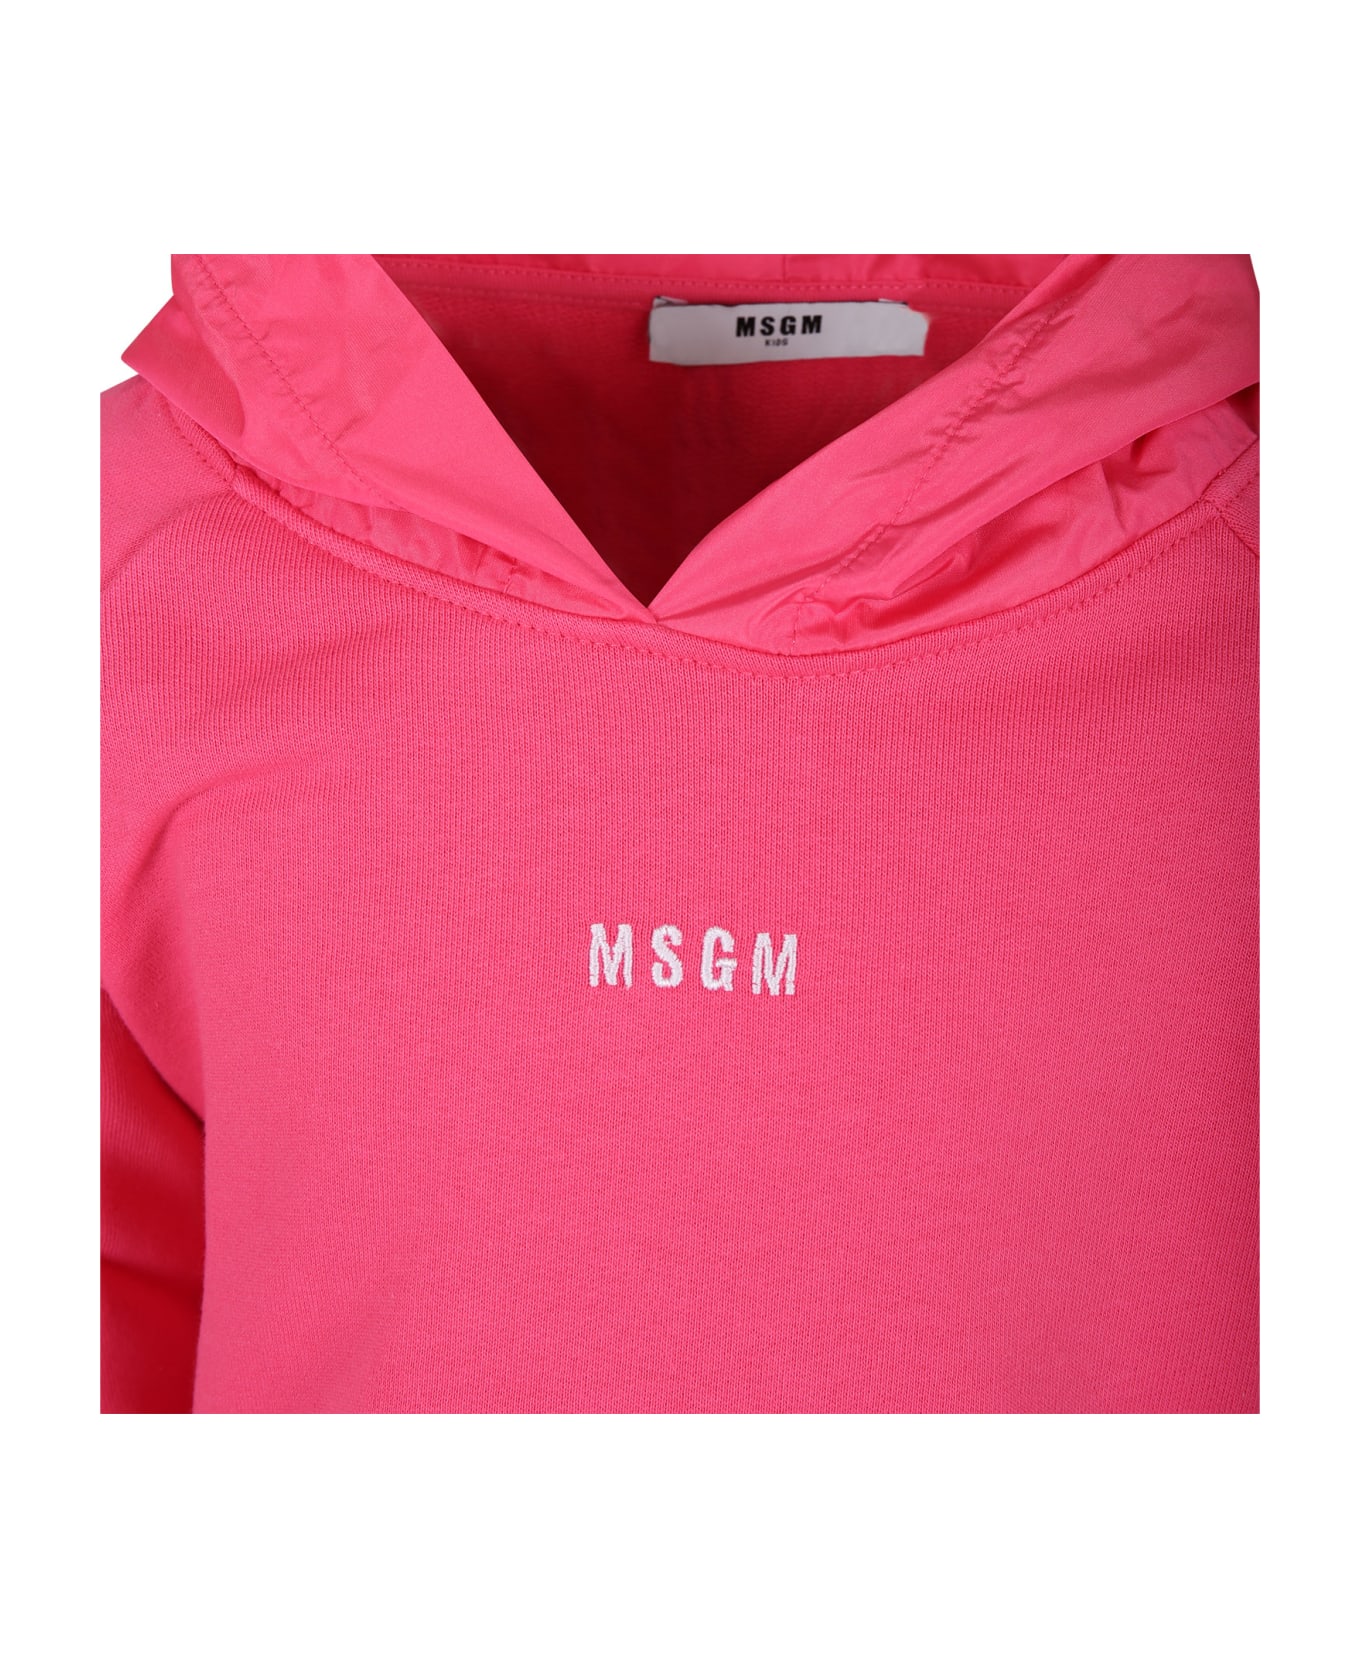 MSGM Fuchsia Sweatshirt For Girl With Logo - Fuchsia